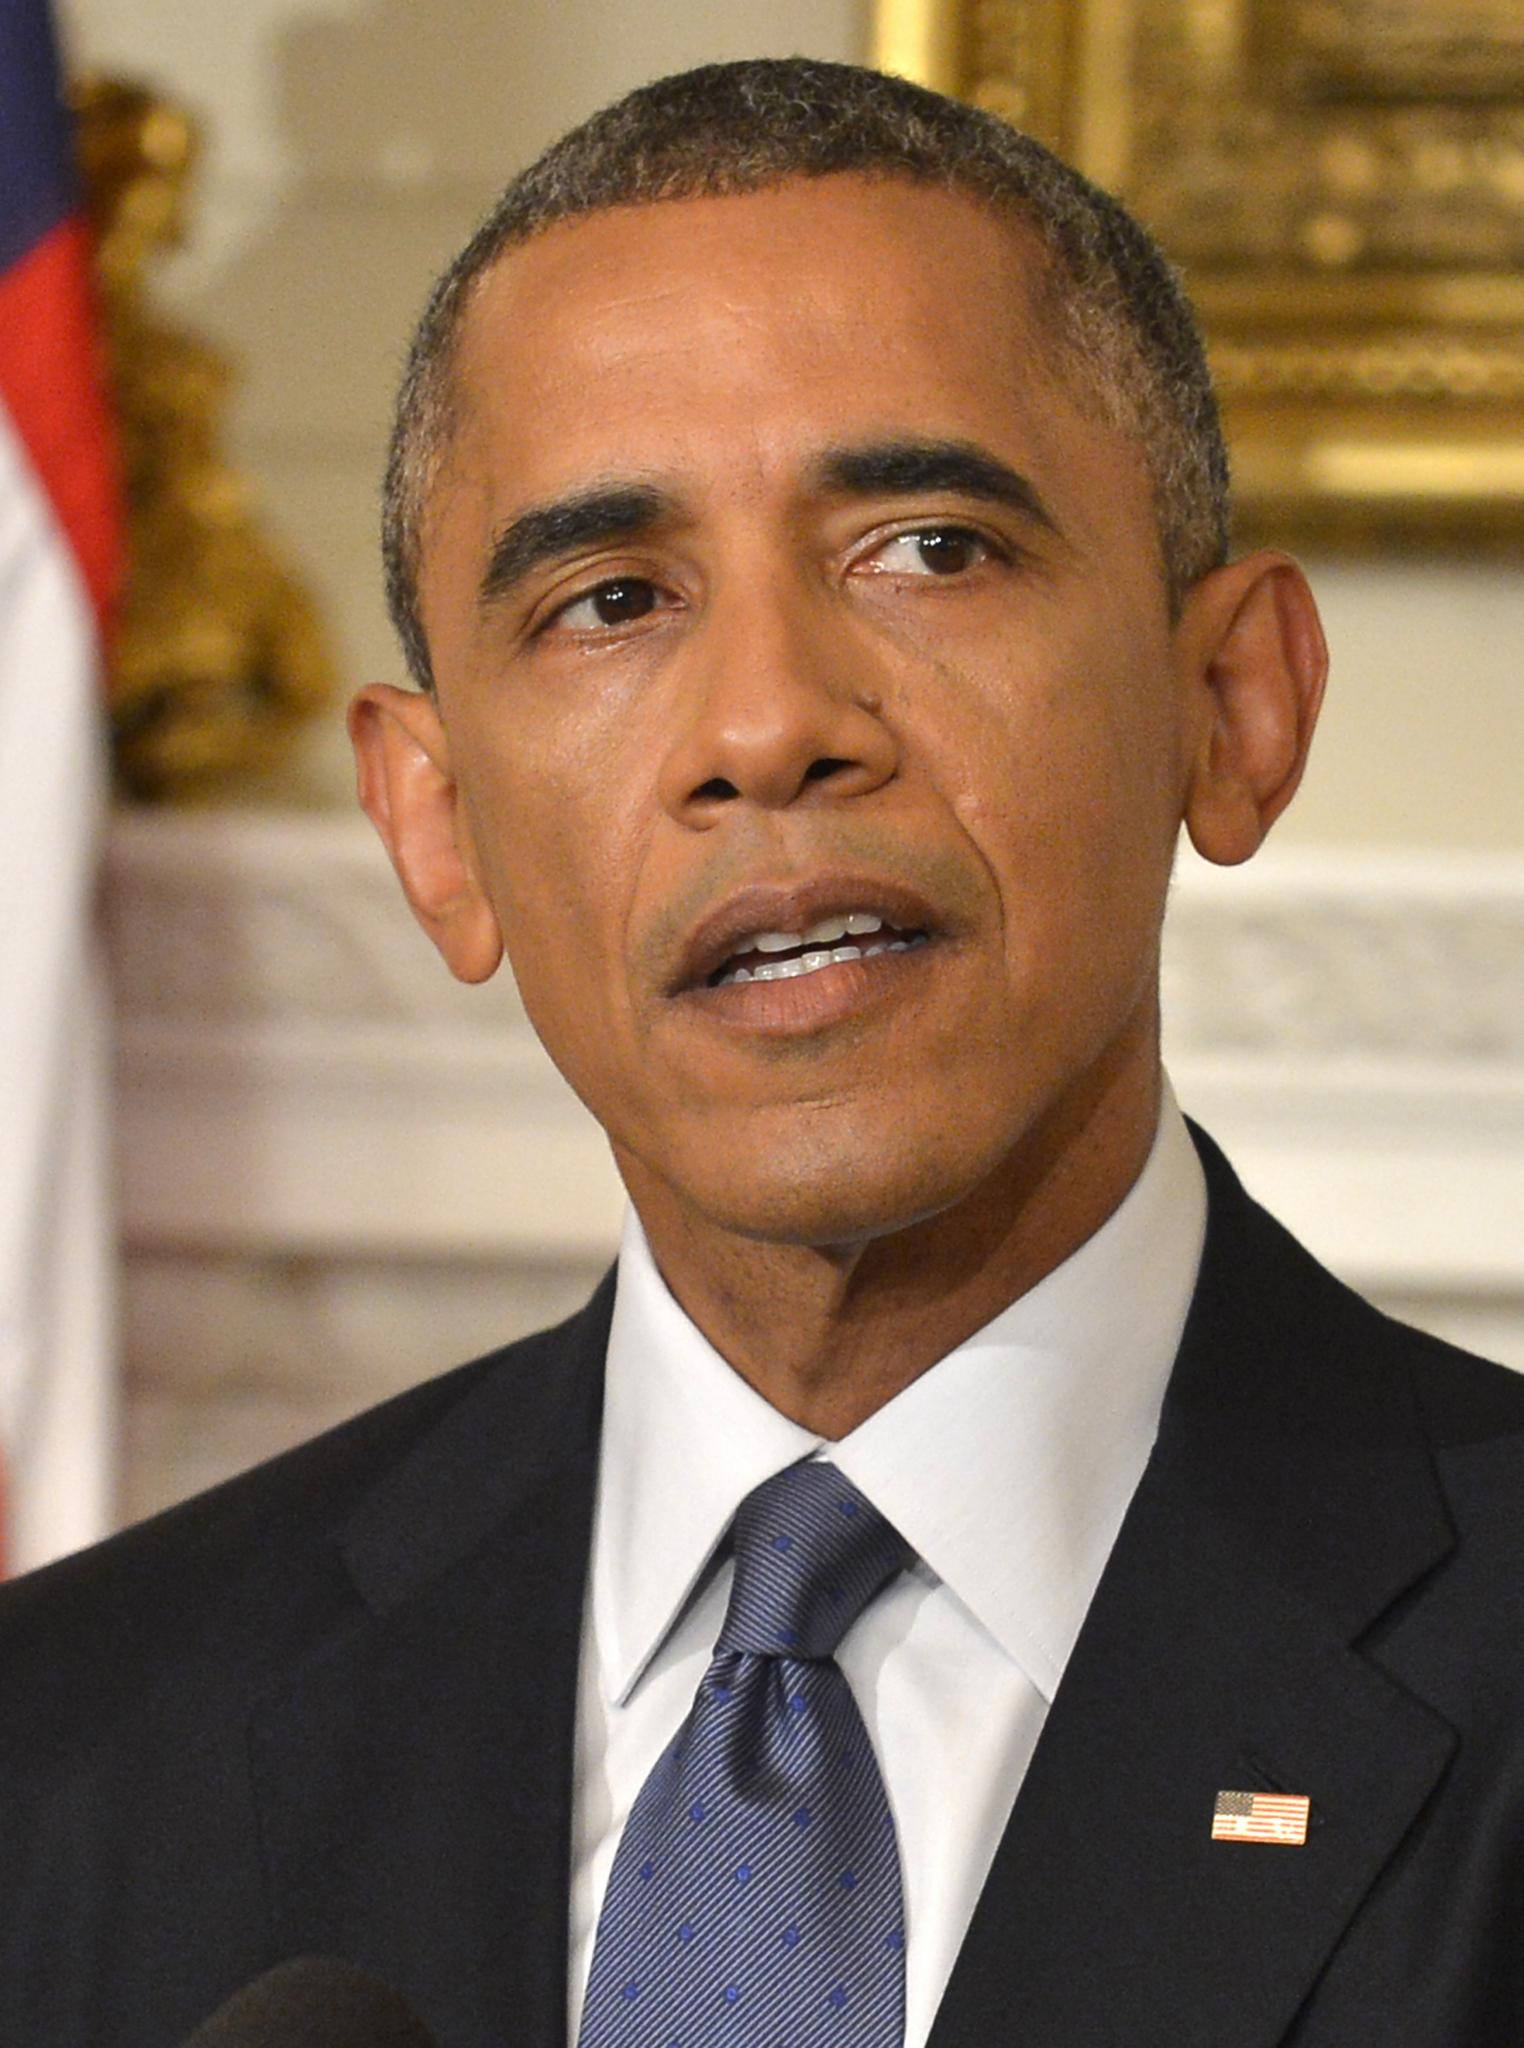 President Obama Calls Michael Brown's Death 'Heartbreaking'